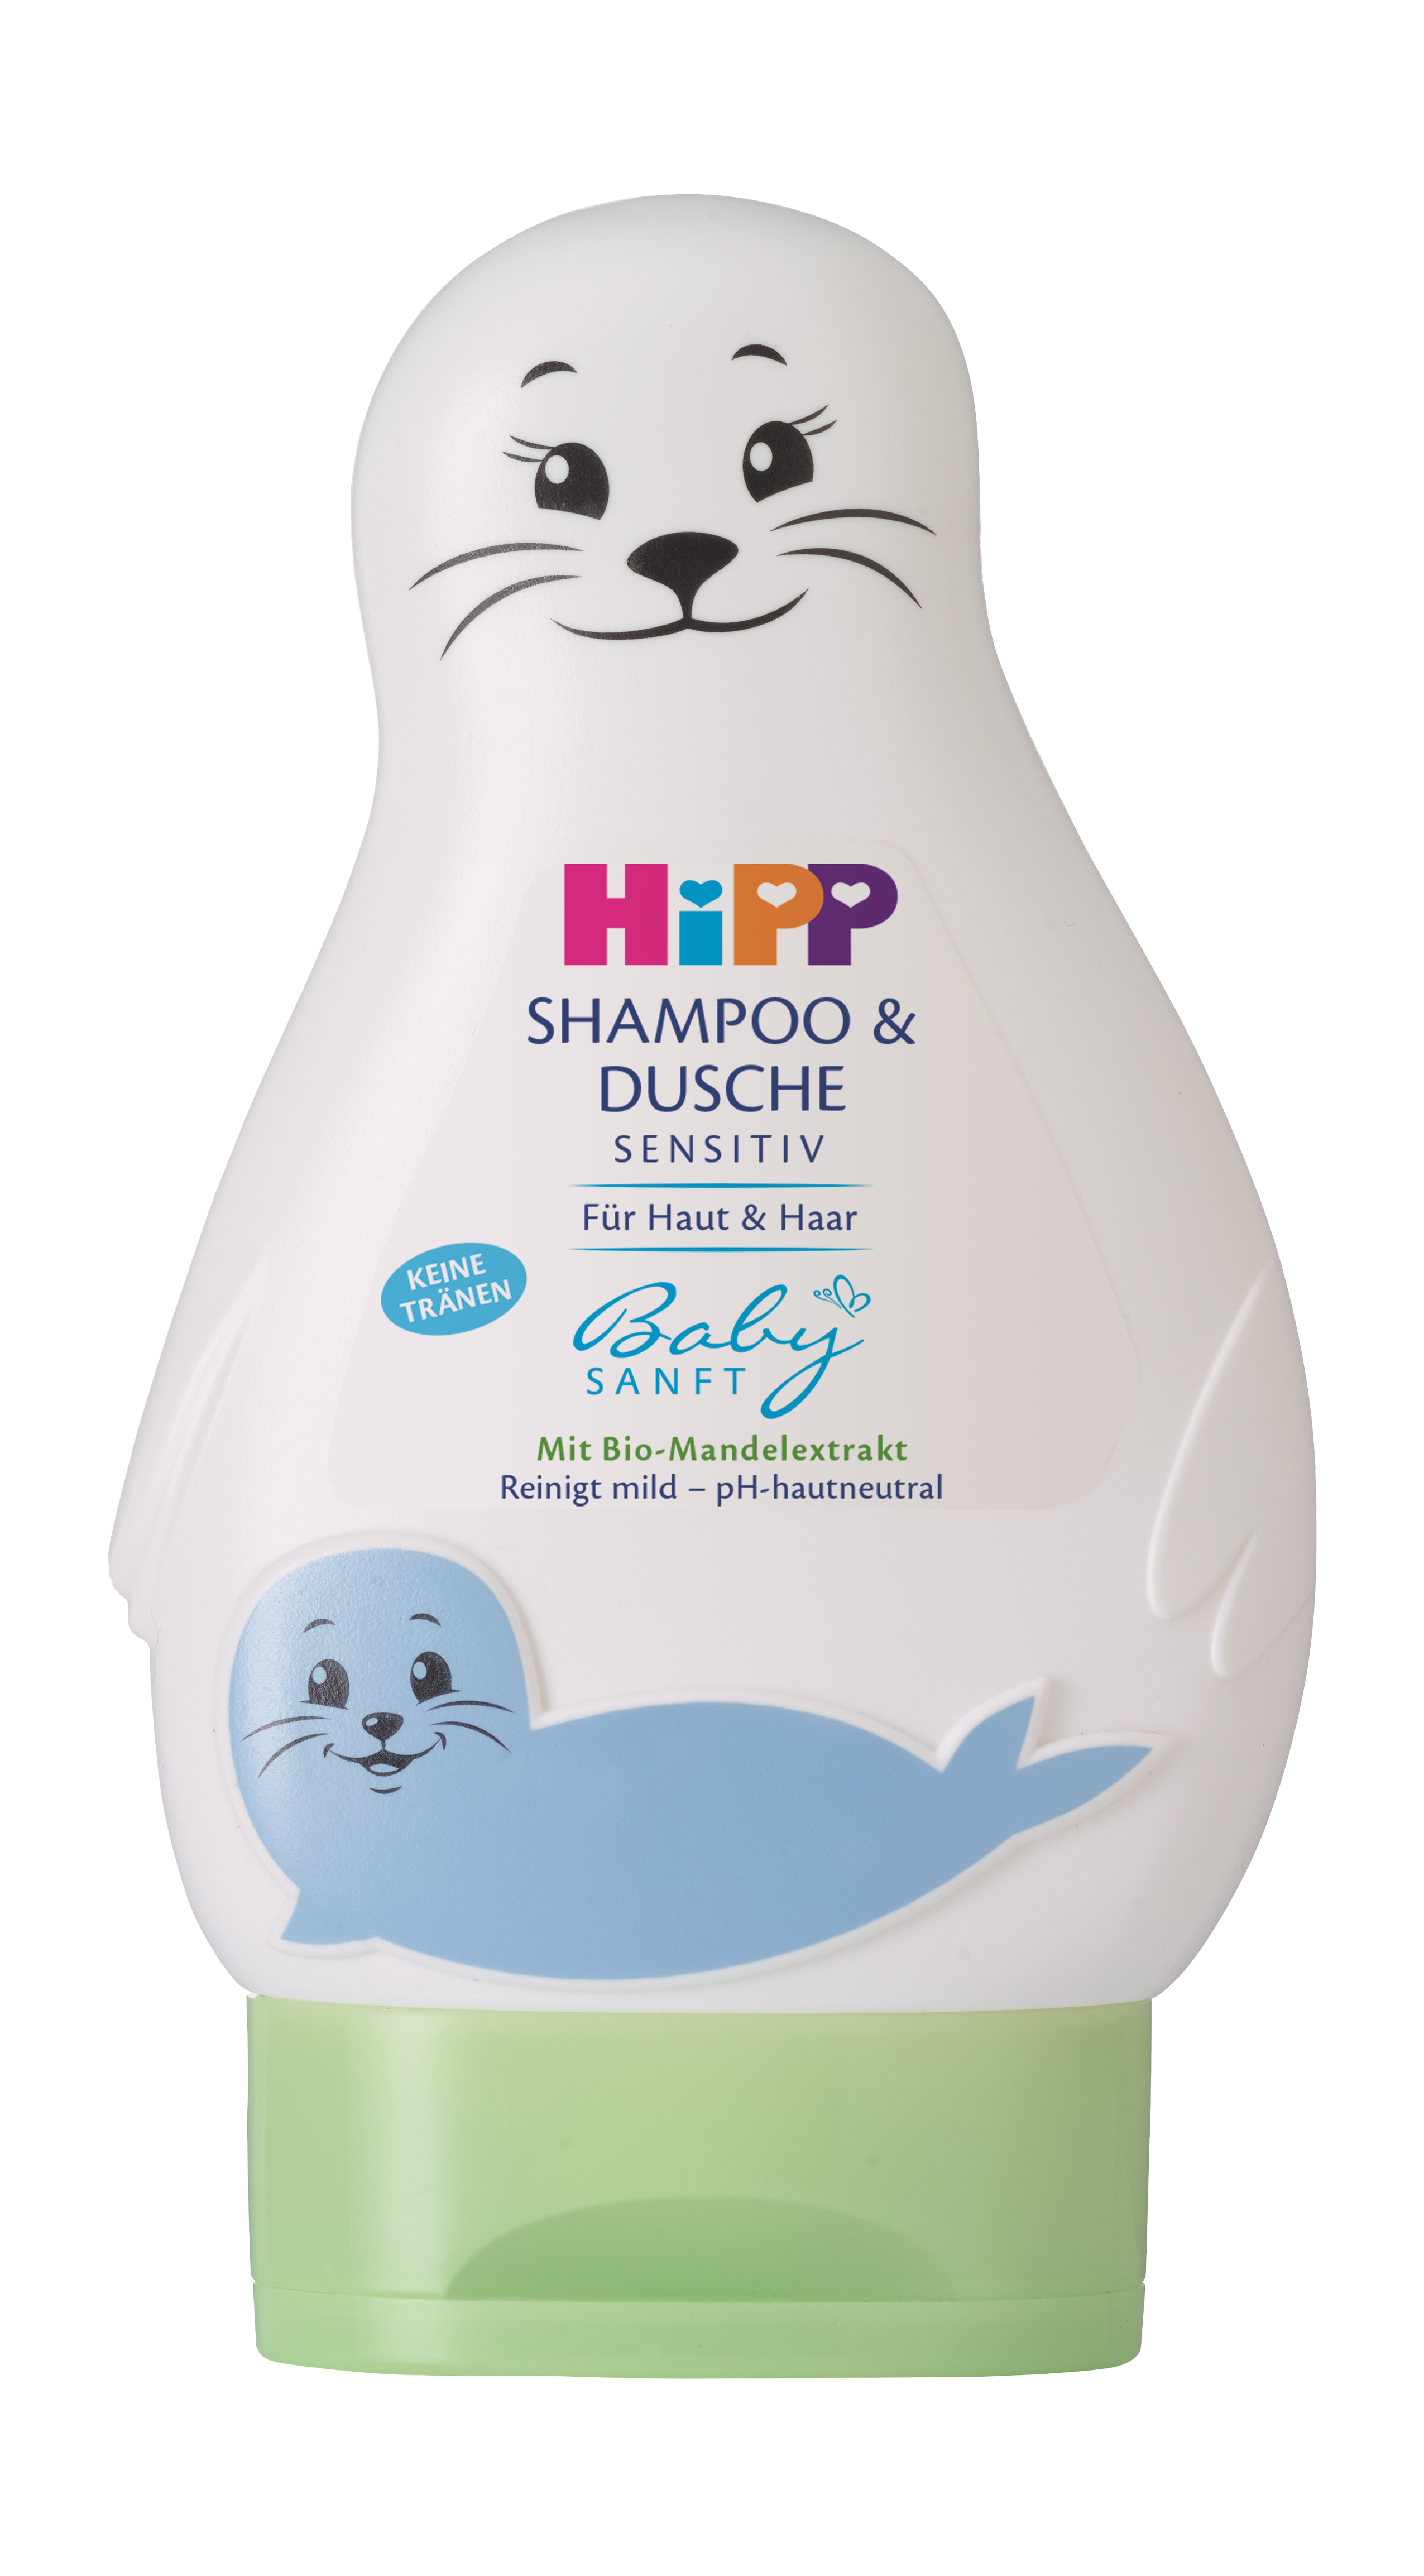 HiPP Shampoo & Dusche sensitiv, 200 ml